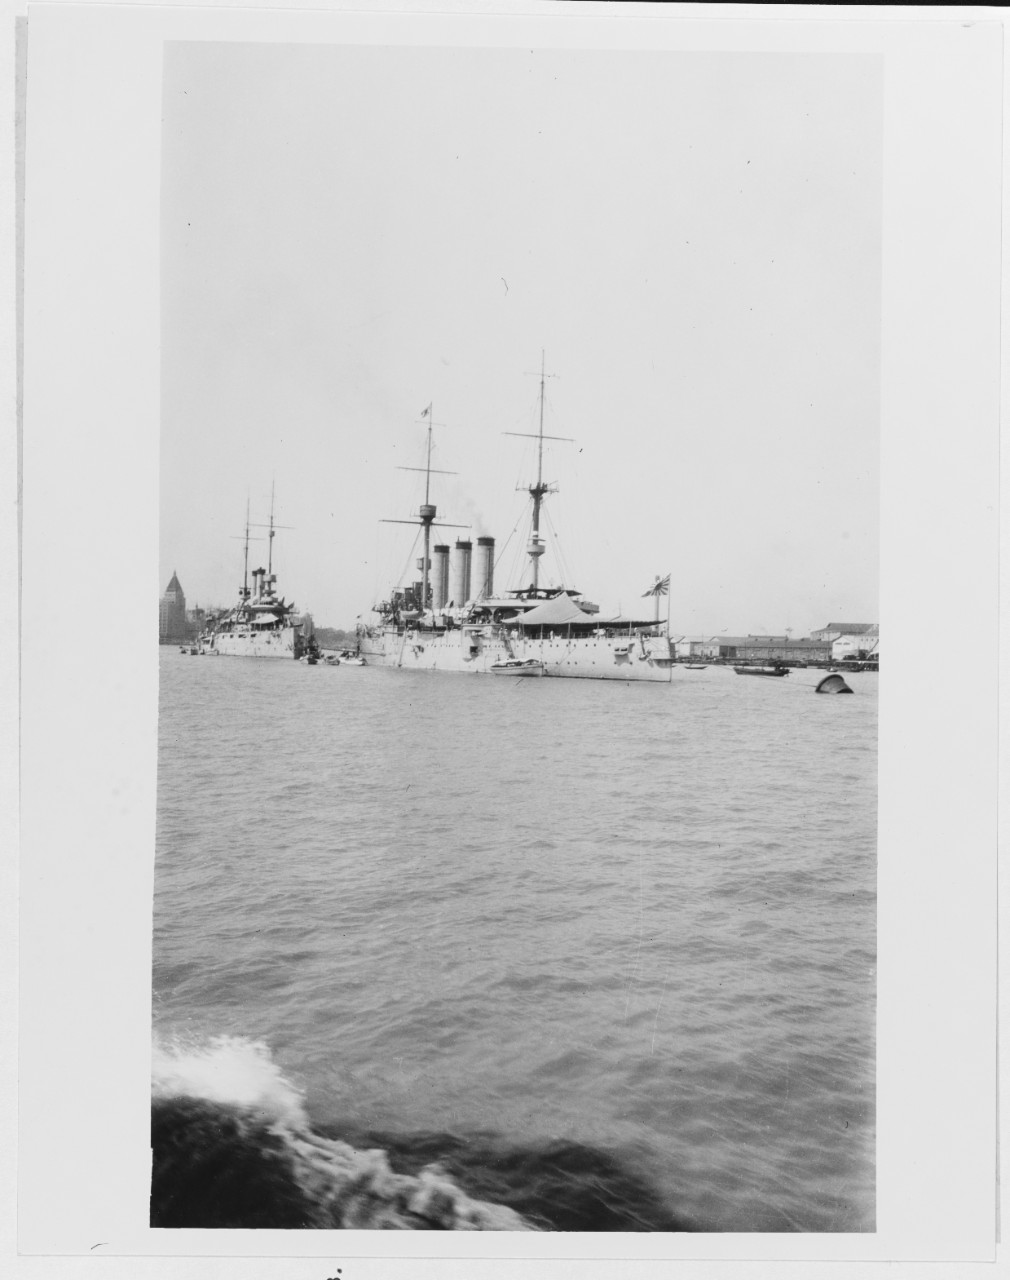 USS ROCHESTER (CA-2), left, and HIJMS IDZUMO (Japanese cruiser, 1899)